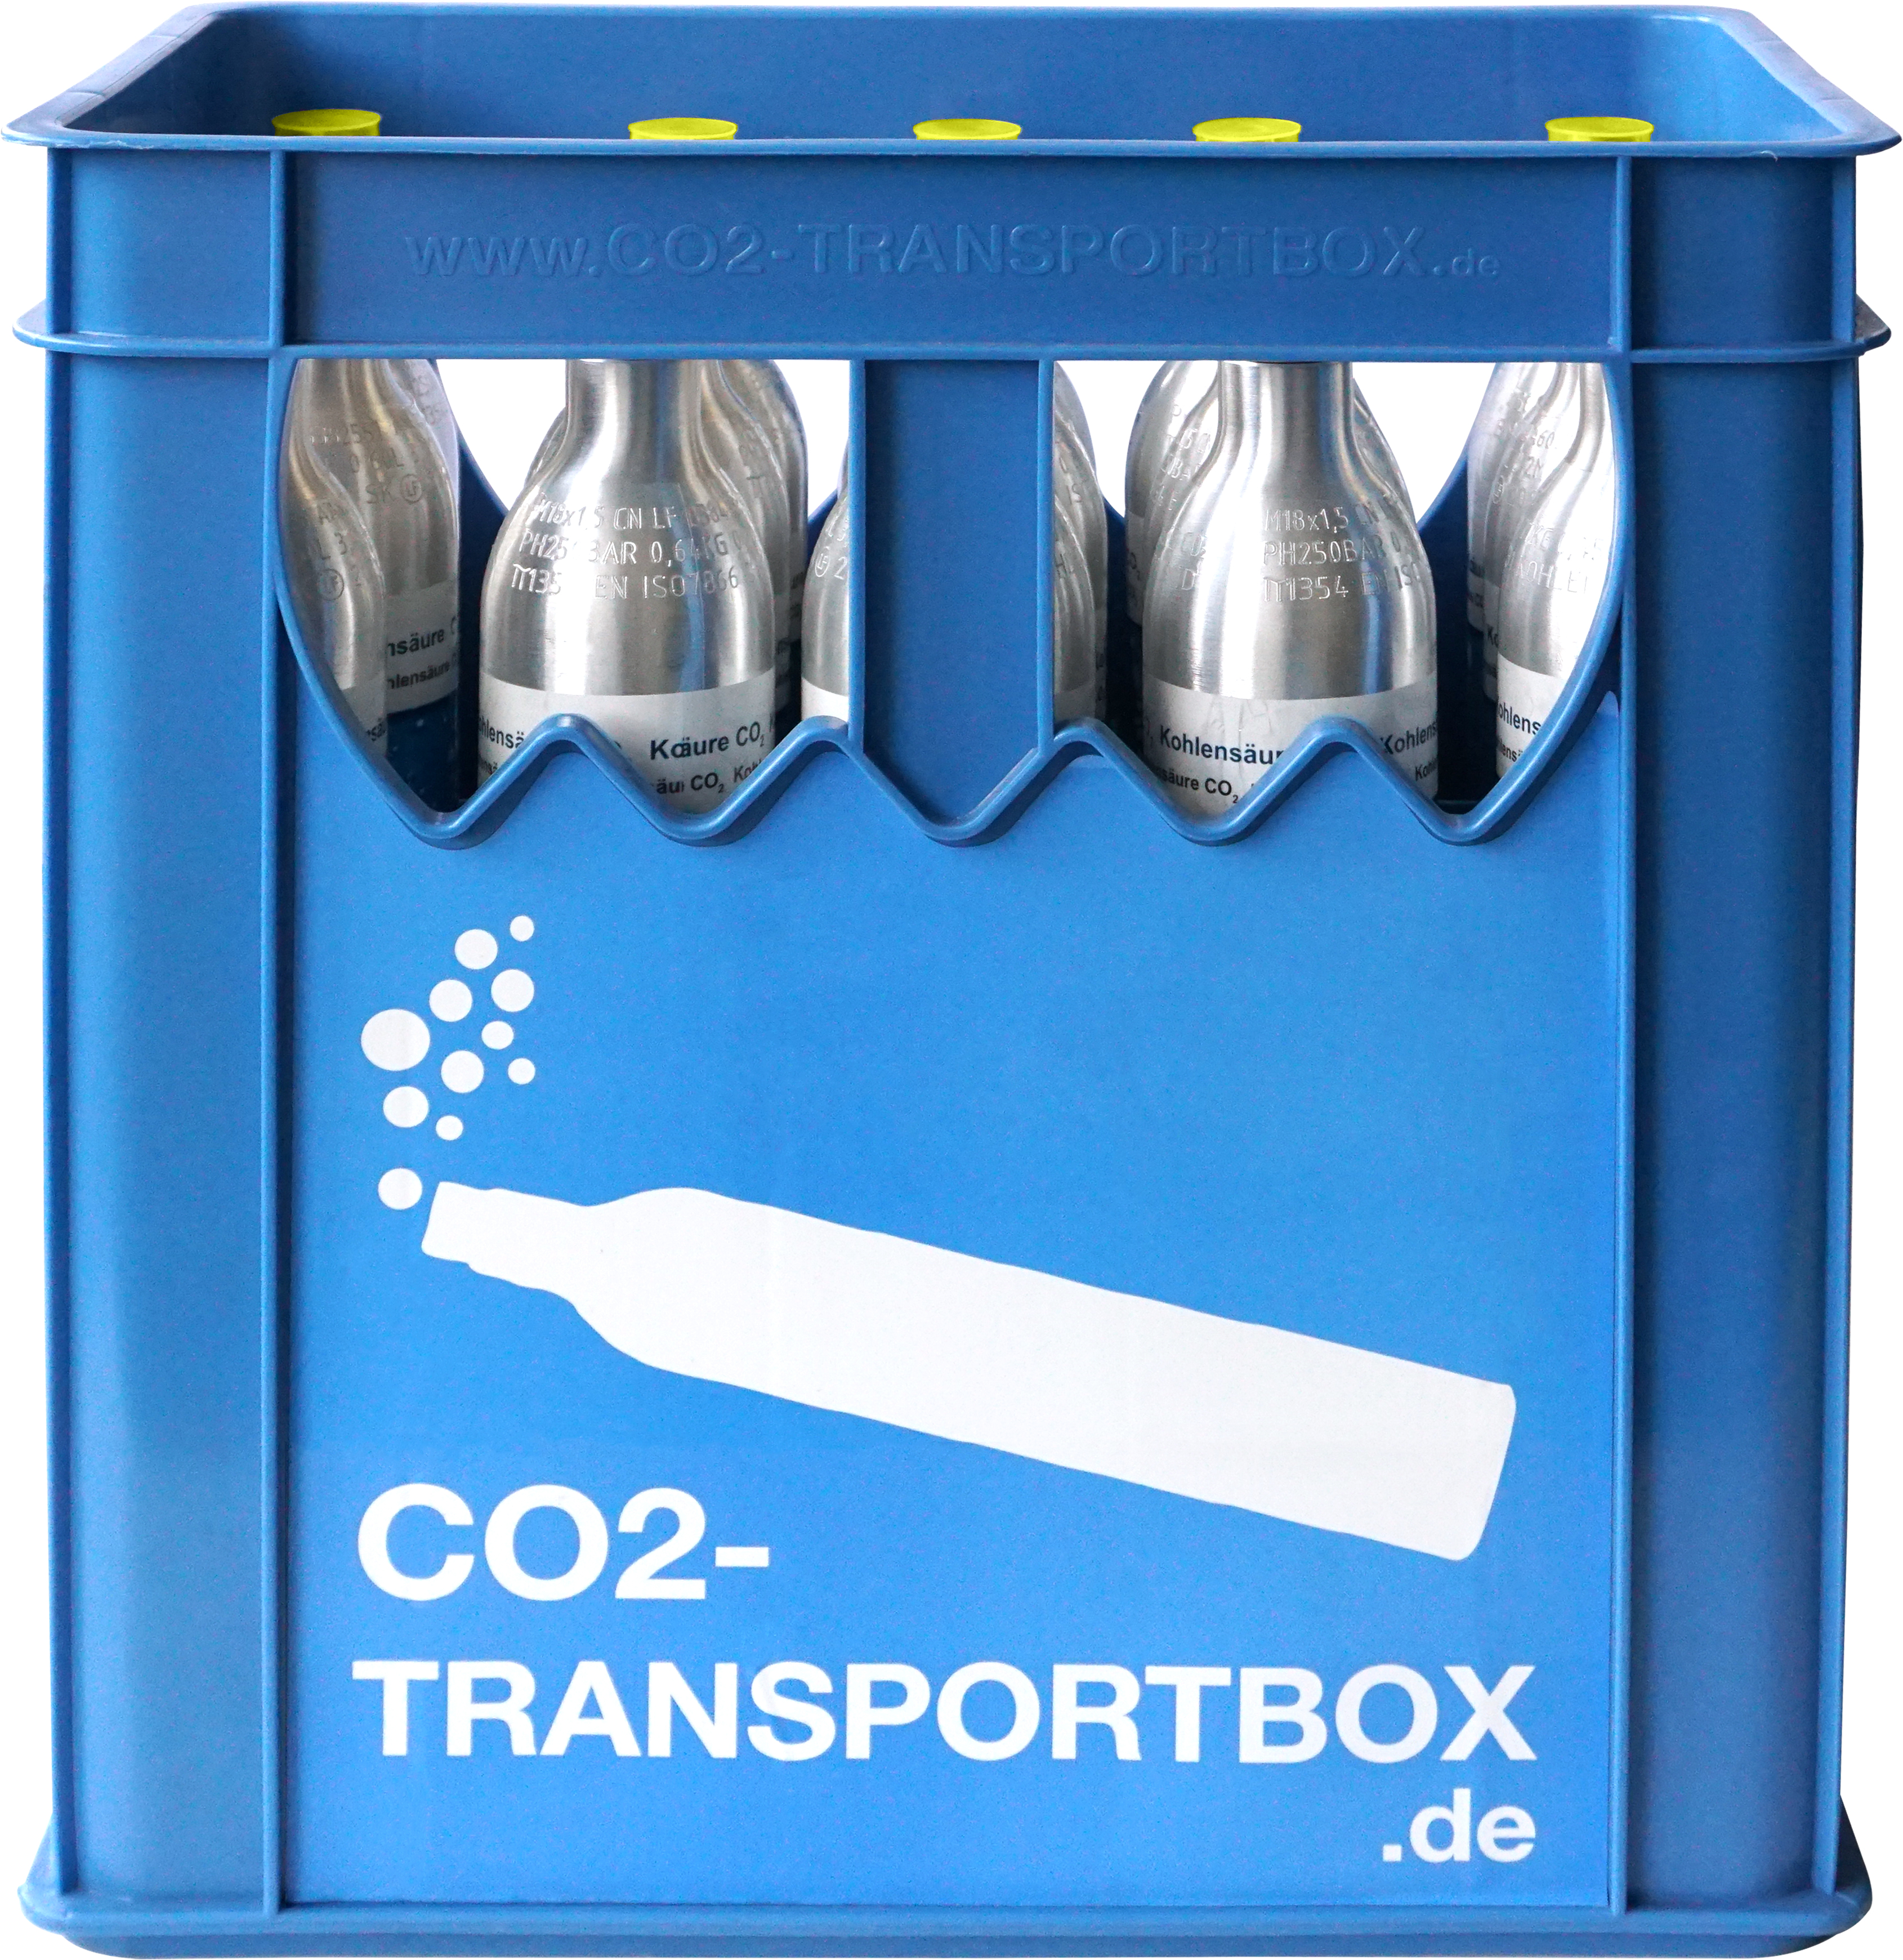 CO2 Transportbox inkl. 15 gefüllter CO2 Zylinder  425 g Kohlensäure für ca. 60l Sprudel-Wasser